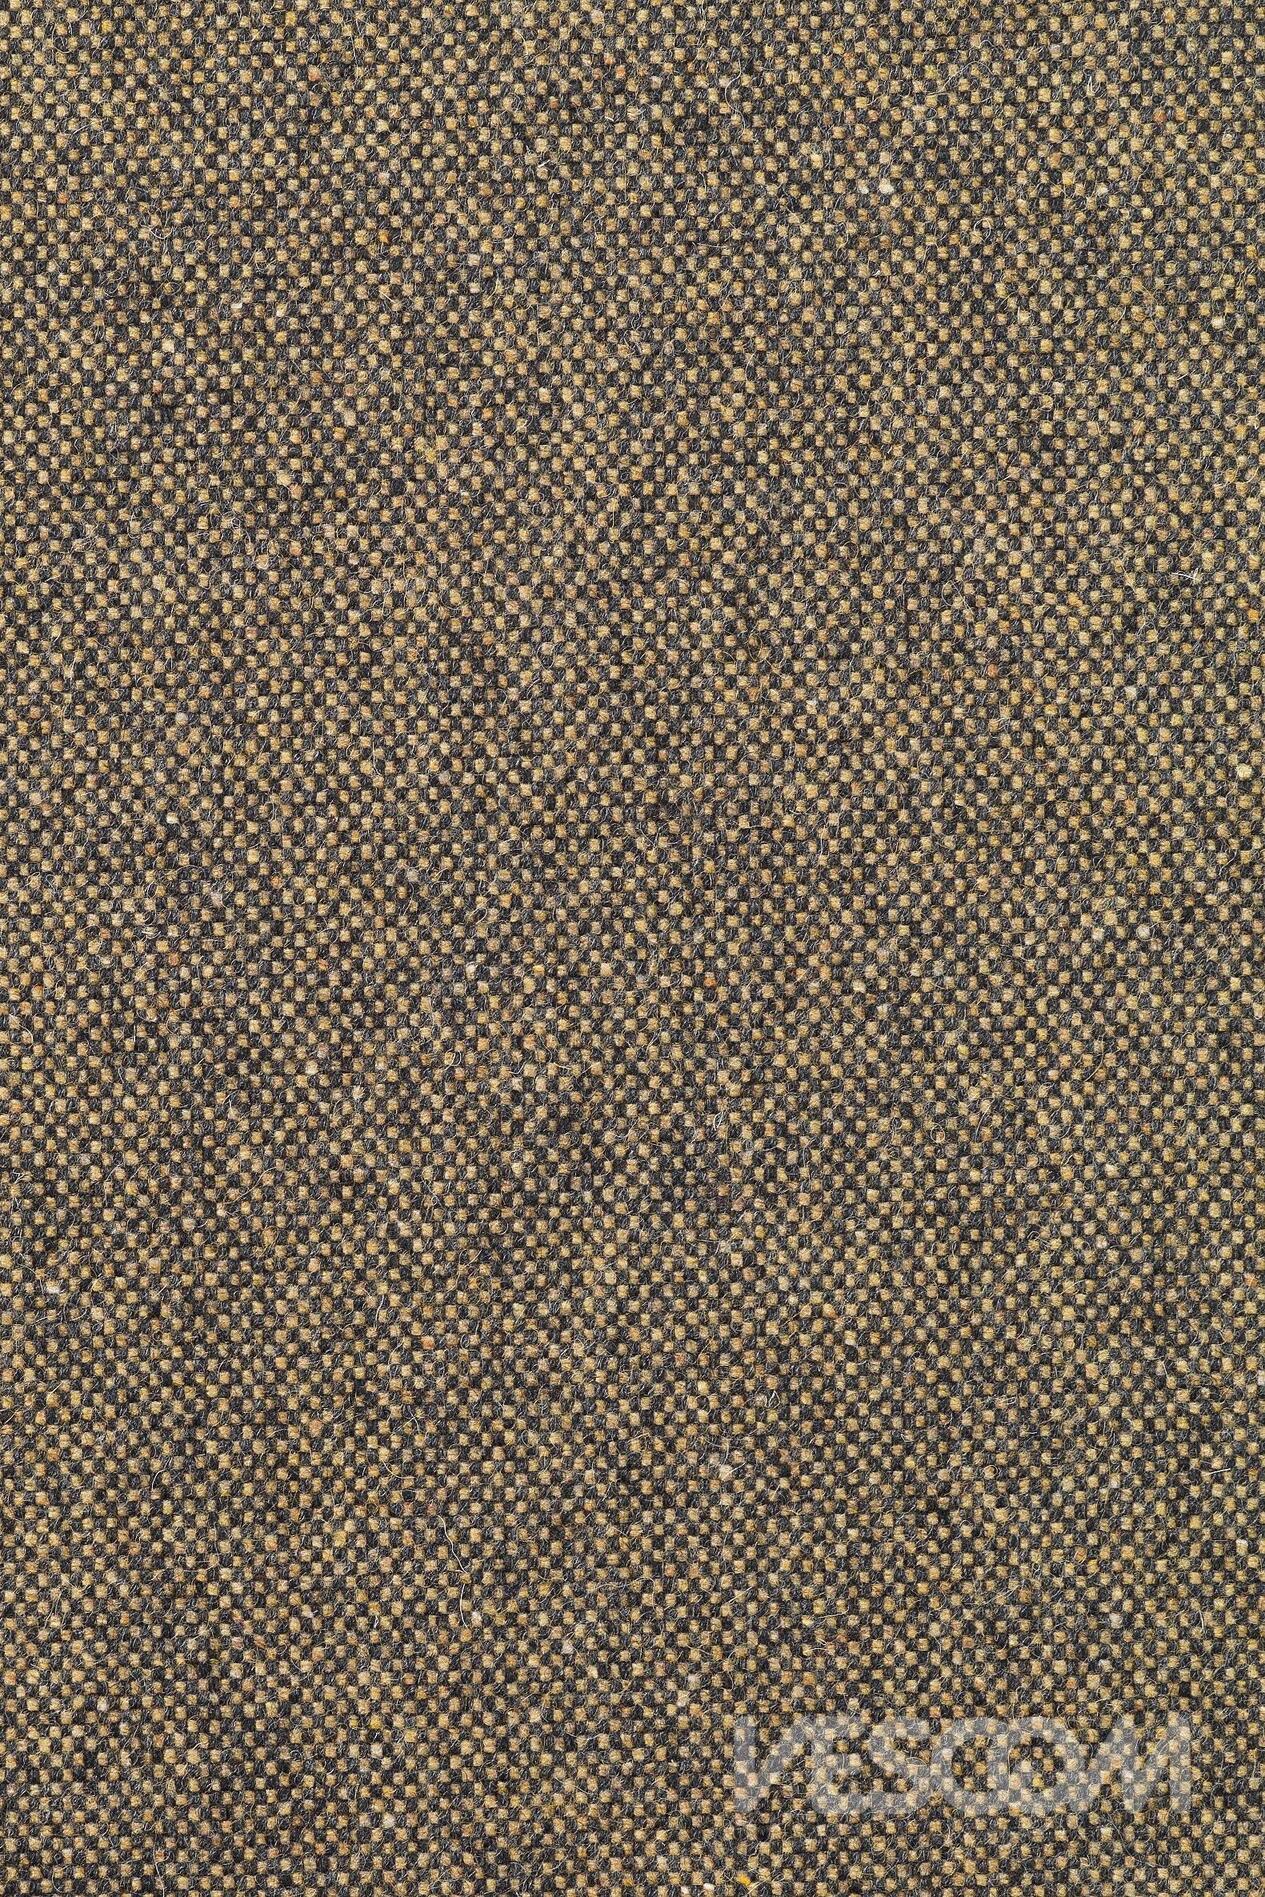 vescom-wolin-upholstery-fabric-7050-19